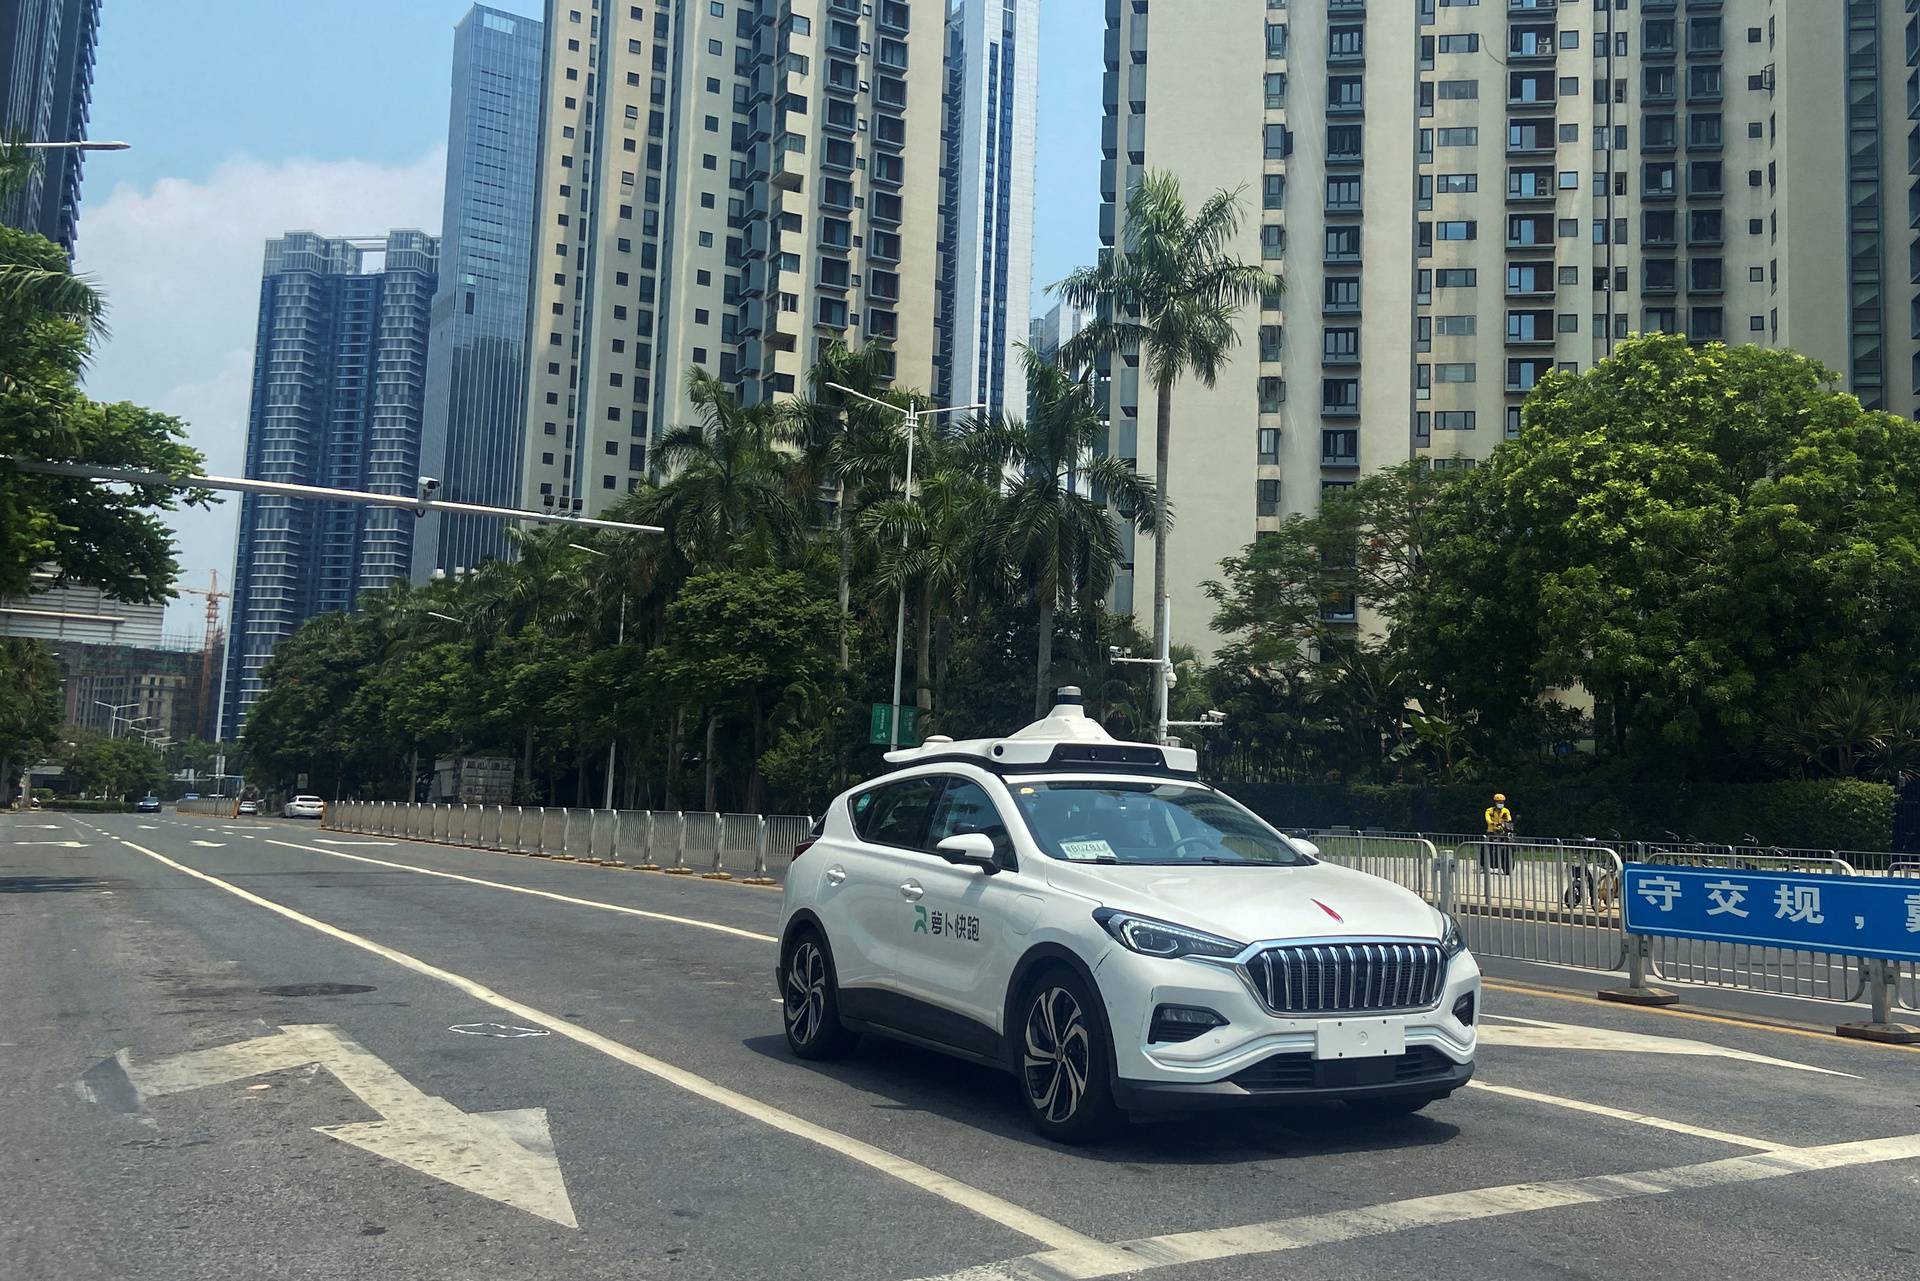 Car of Baidu's autonomous ride-hailing service platform Apollo Go on a street in Shenzhen